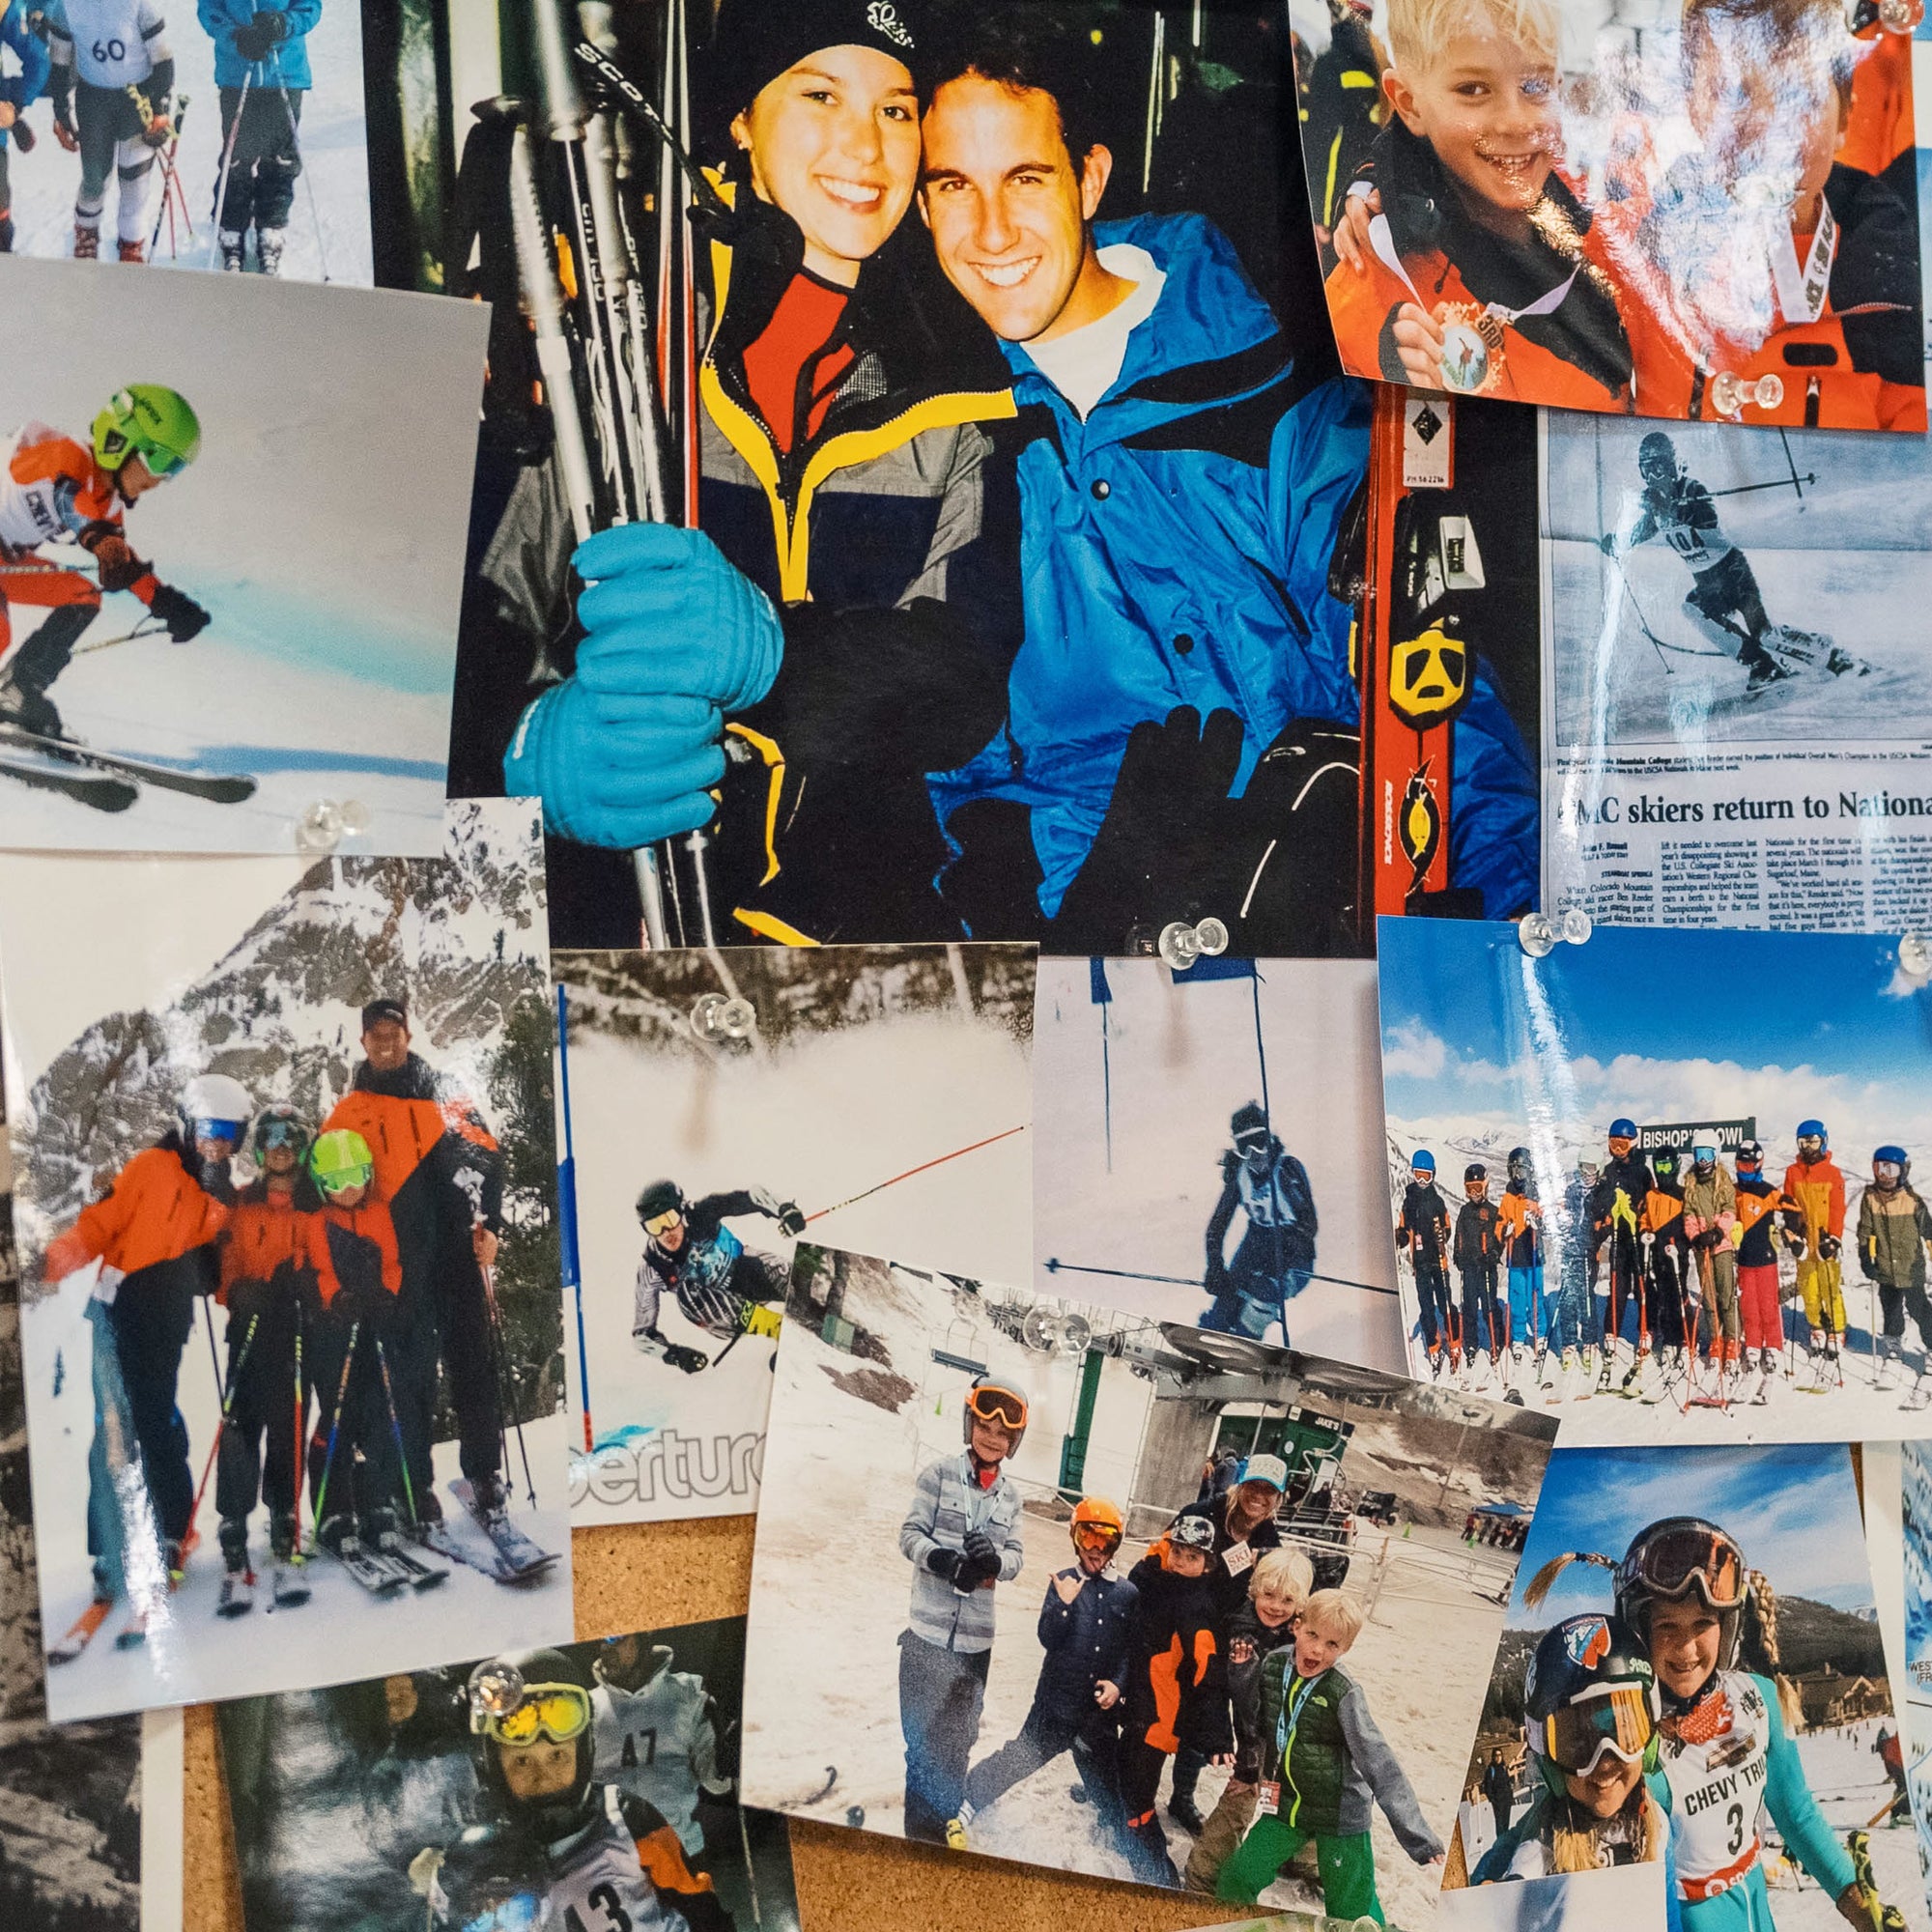 Chaussettes de ski CEP Snowfall - CEP - Snow Emotion, magasin ski